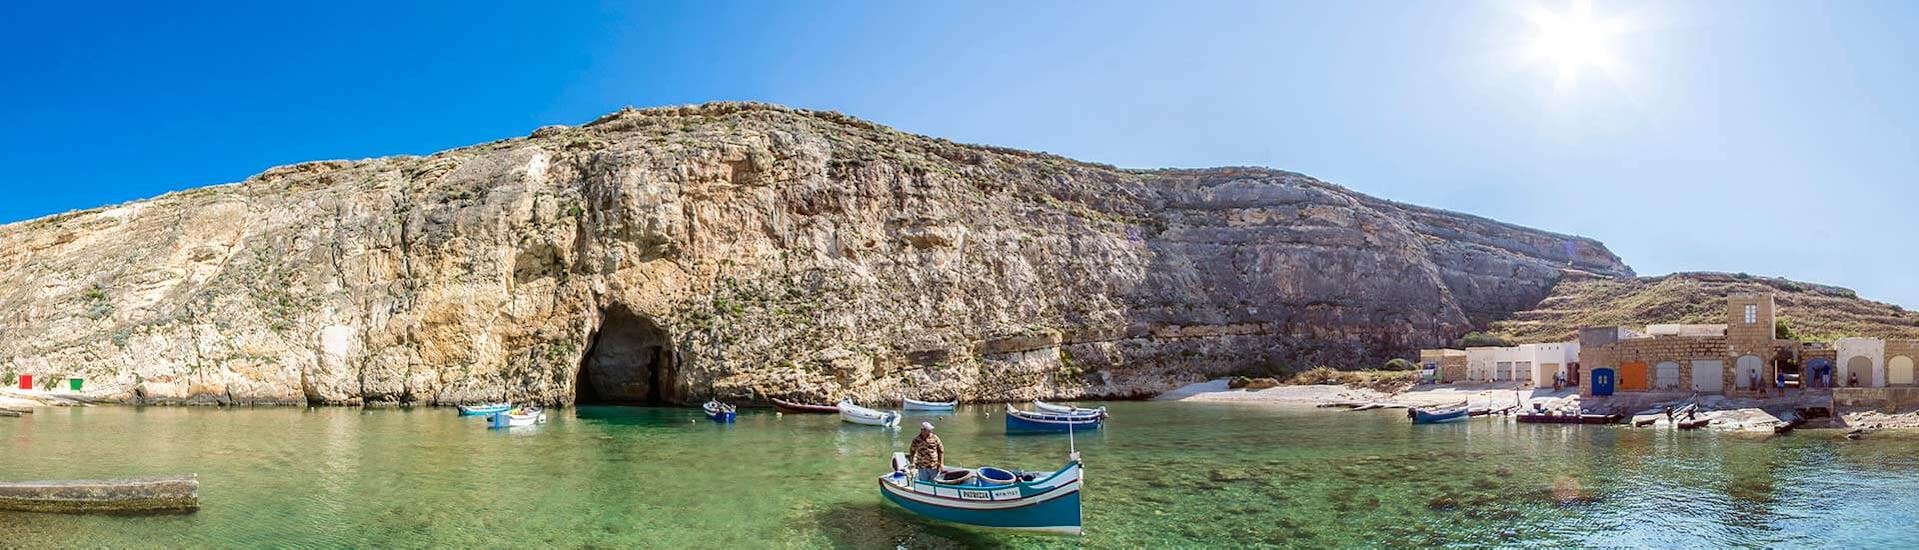 Vue lors de la Balade en bateau - Gozo avec Supreme Travel Malta.